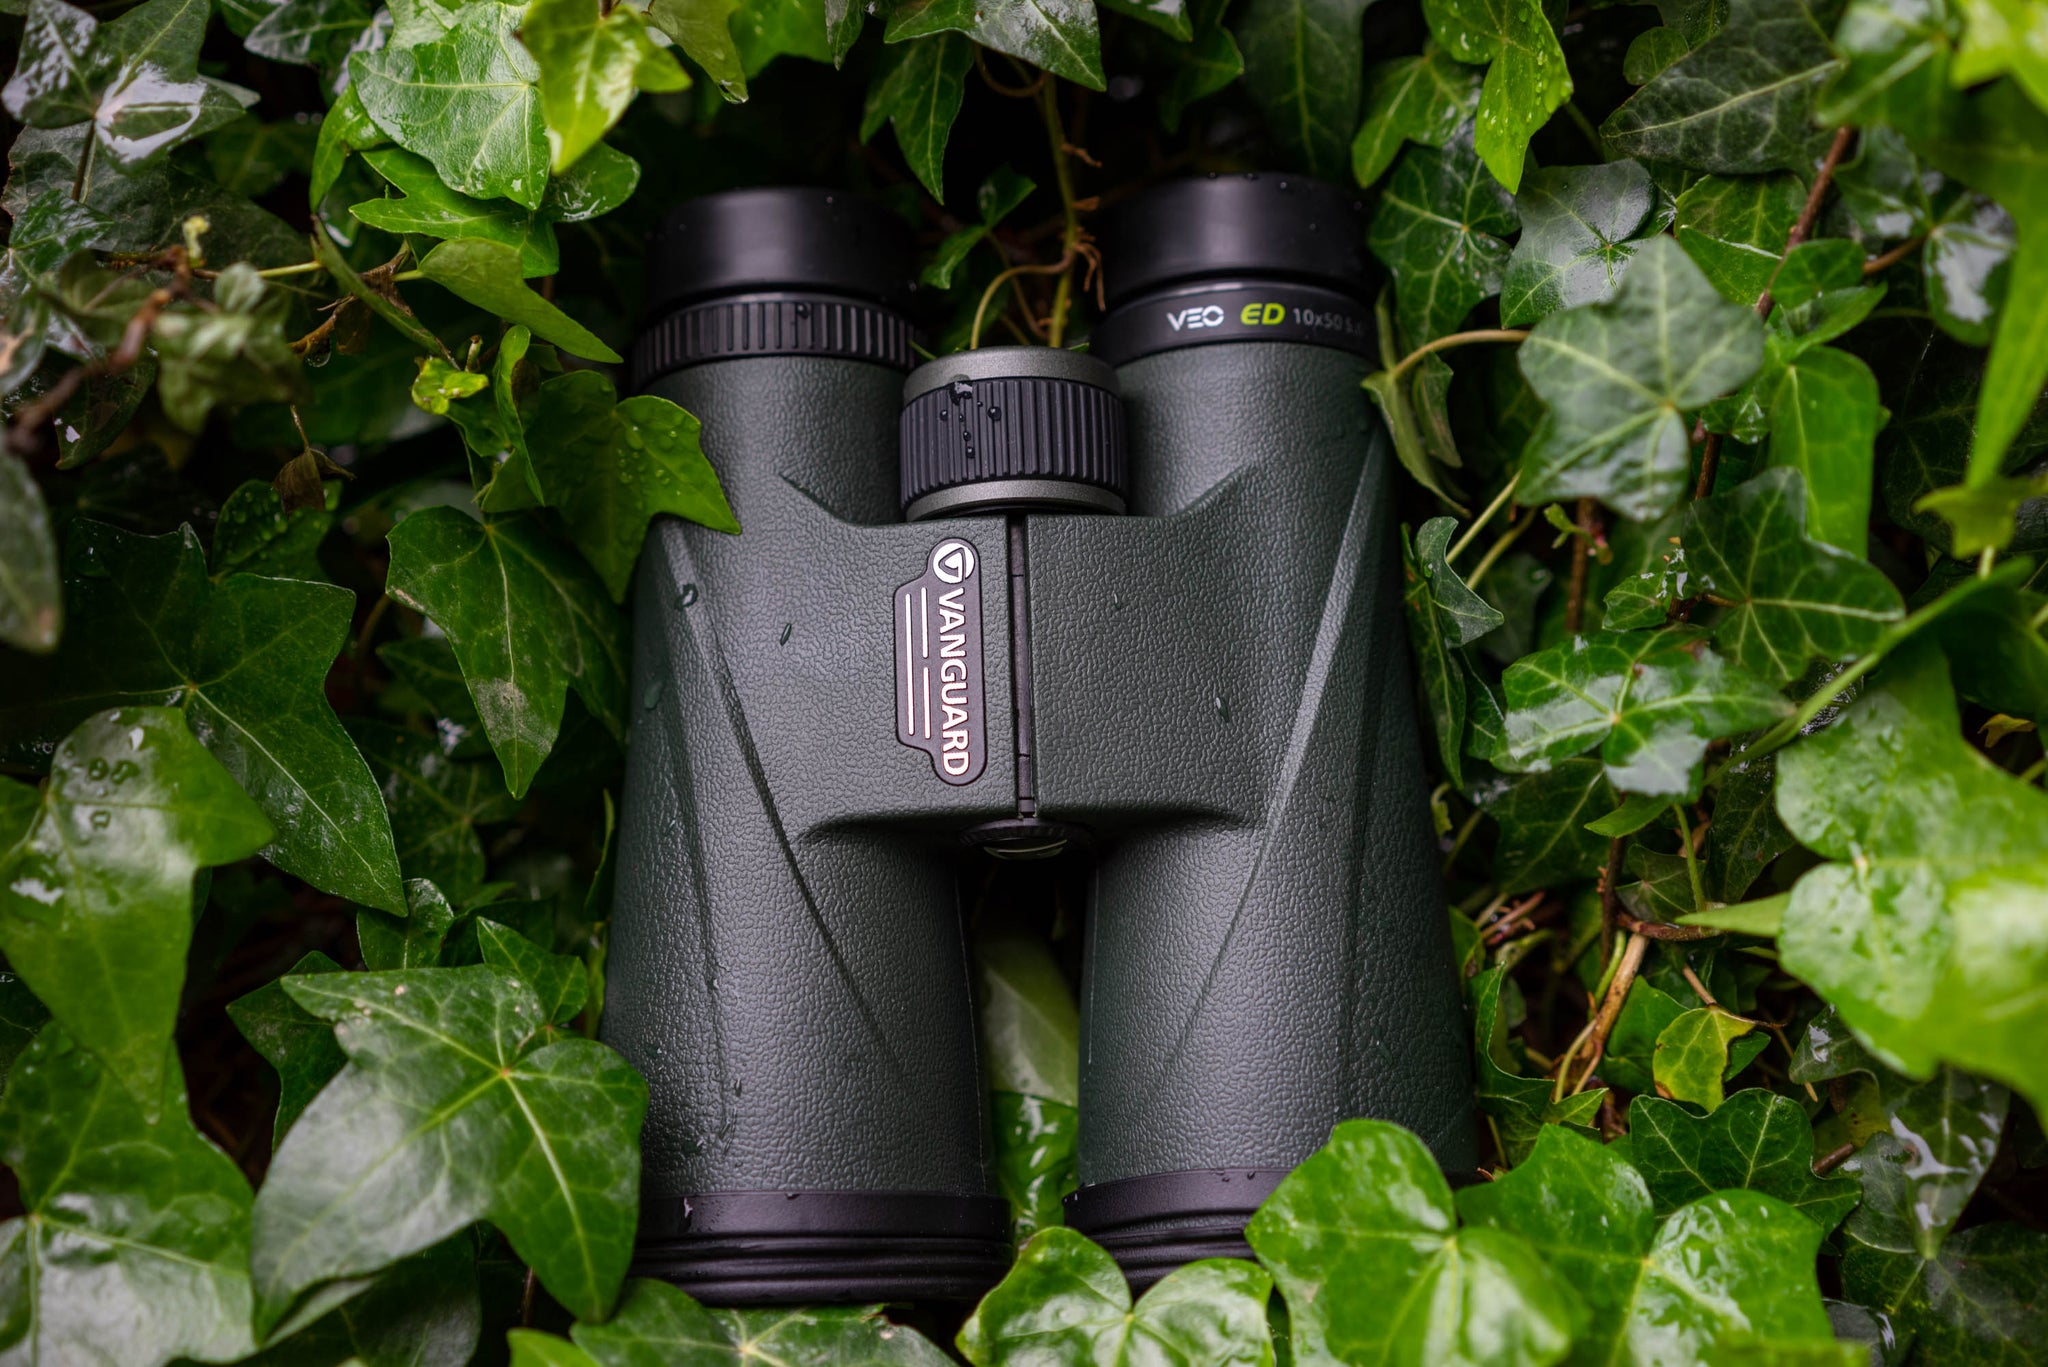 best binocular for birding hunting outdoors hiking nature glass ED glass binoculars bundle vanguard veo ED